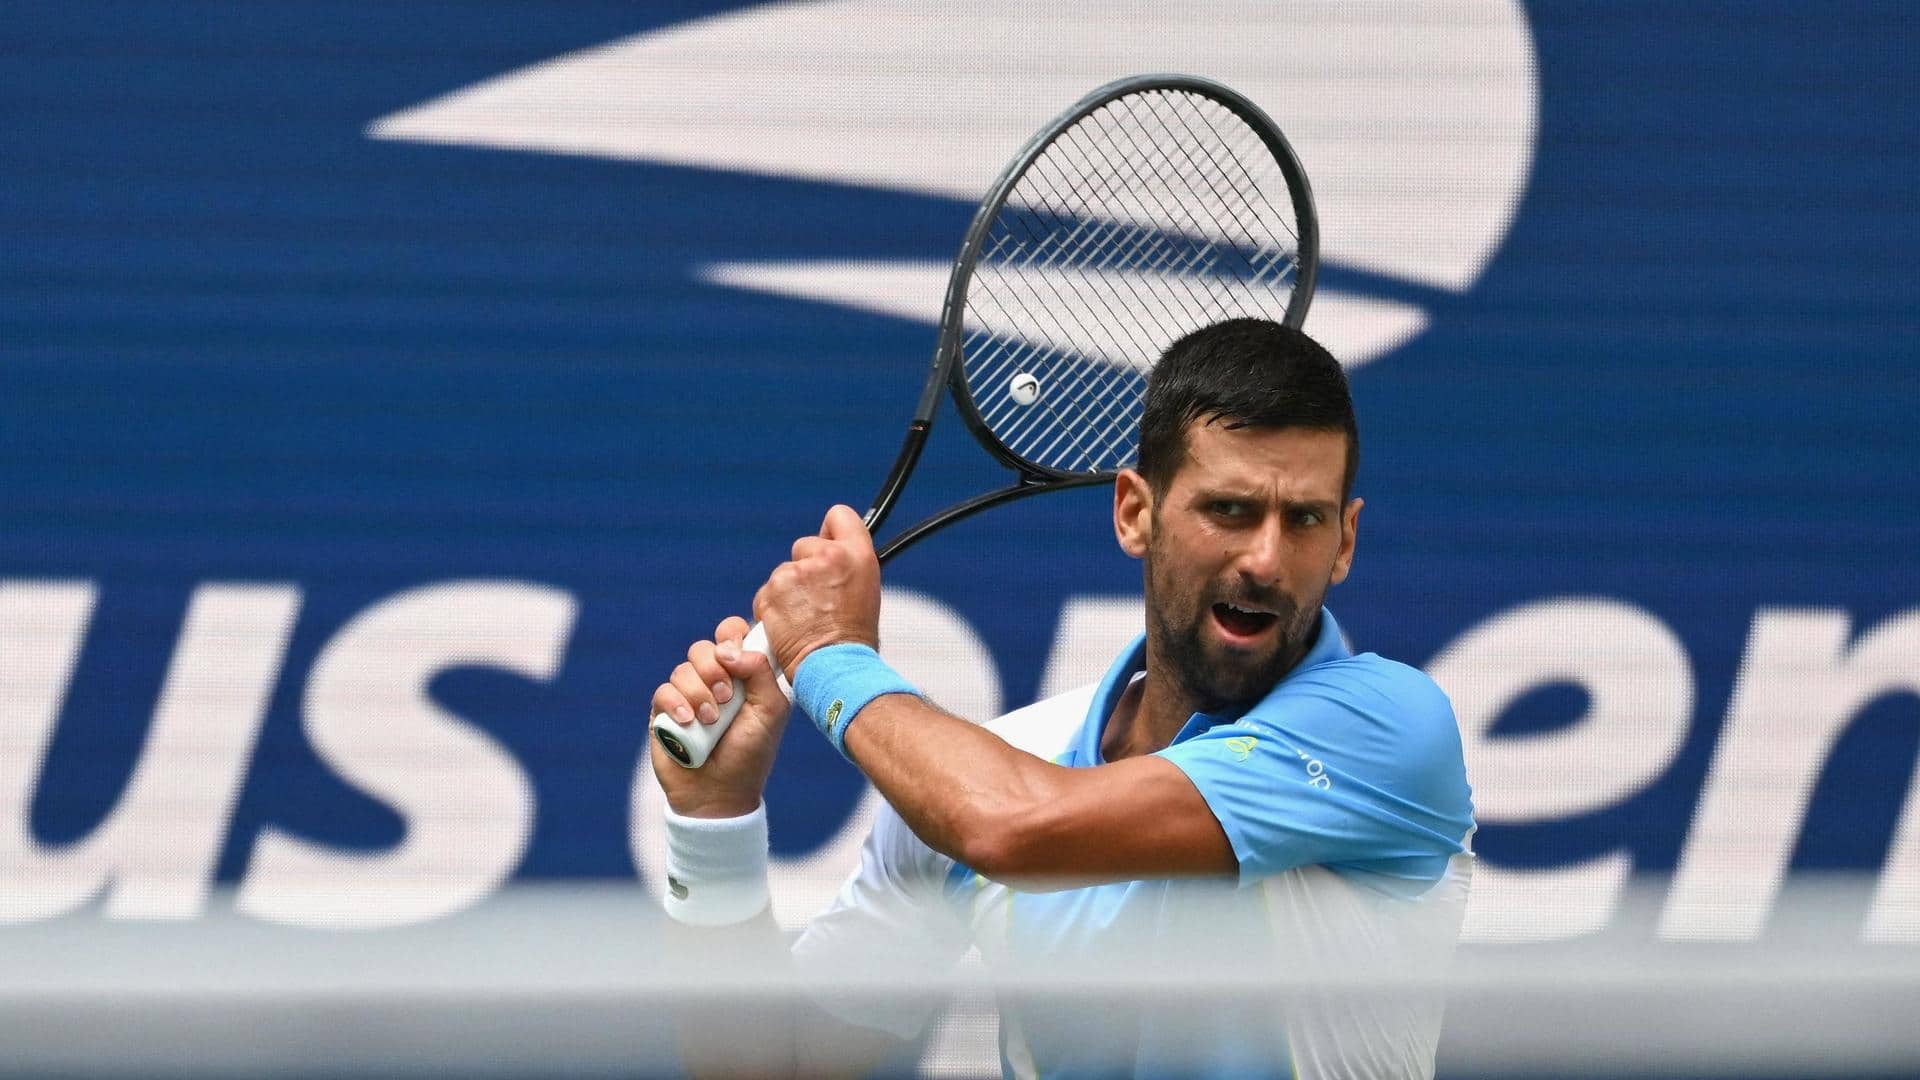 2023 US Open, Novak Djokovic reaches third round: Key stats